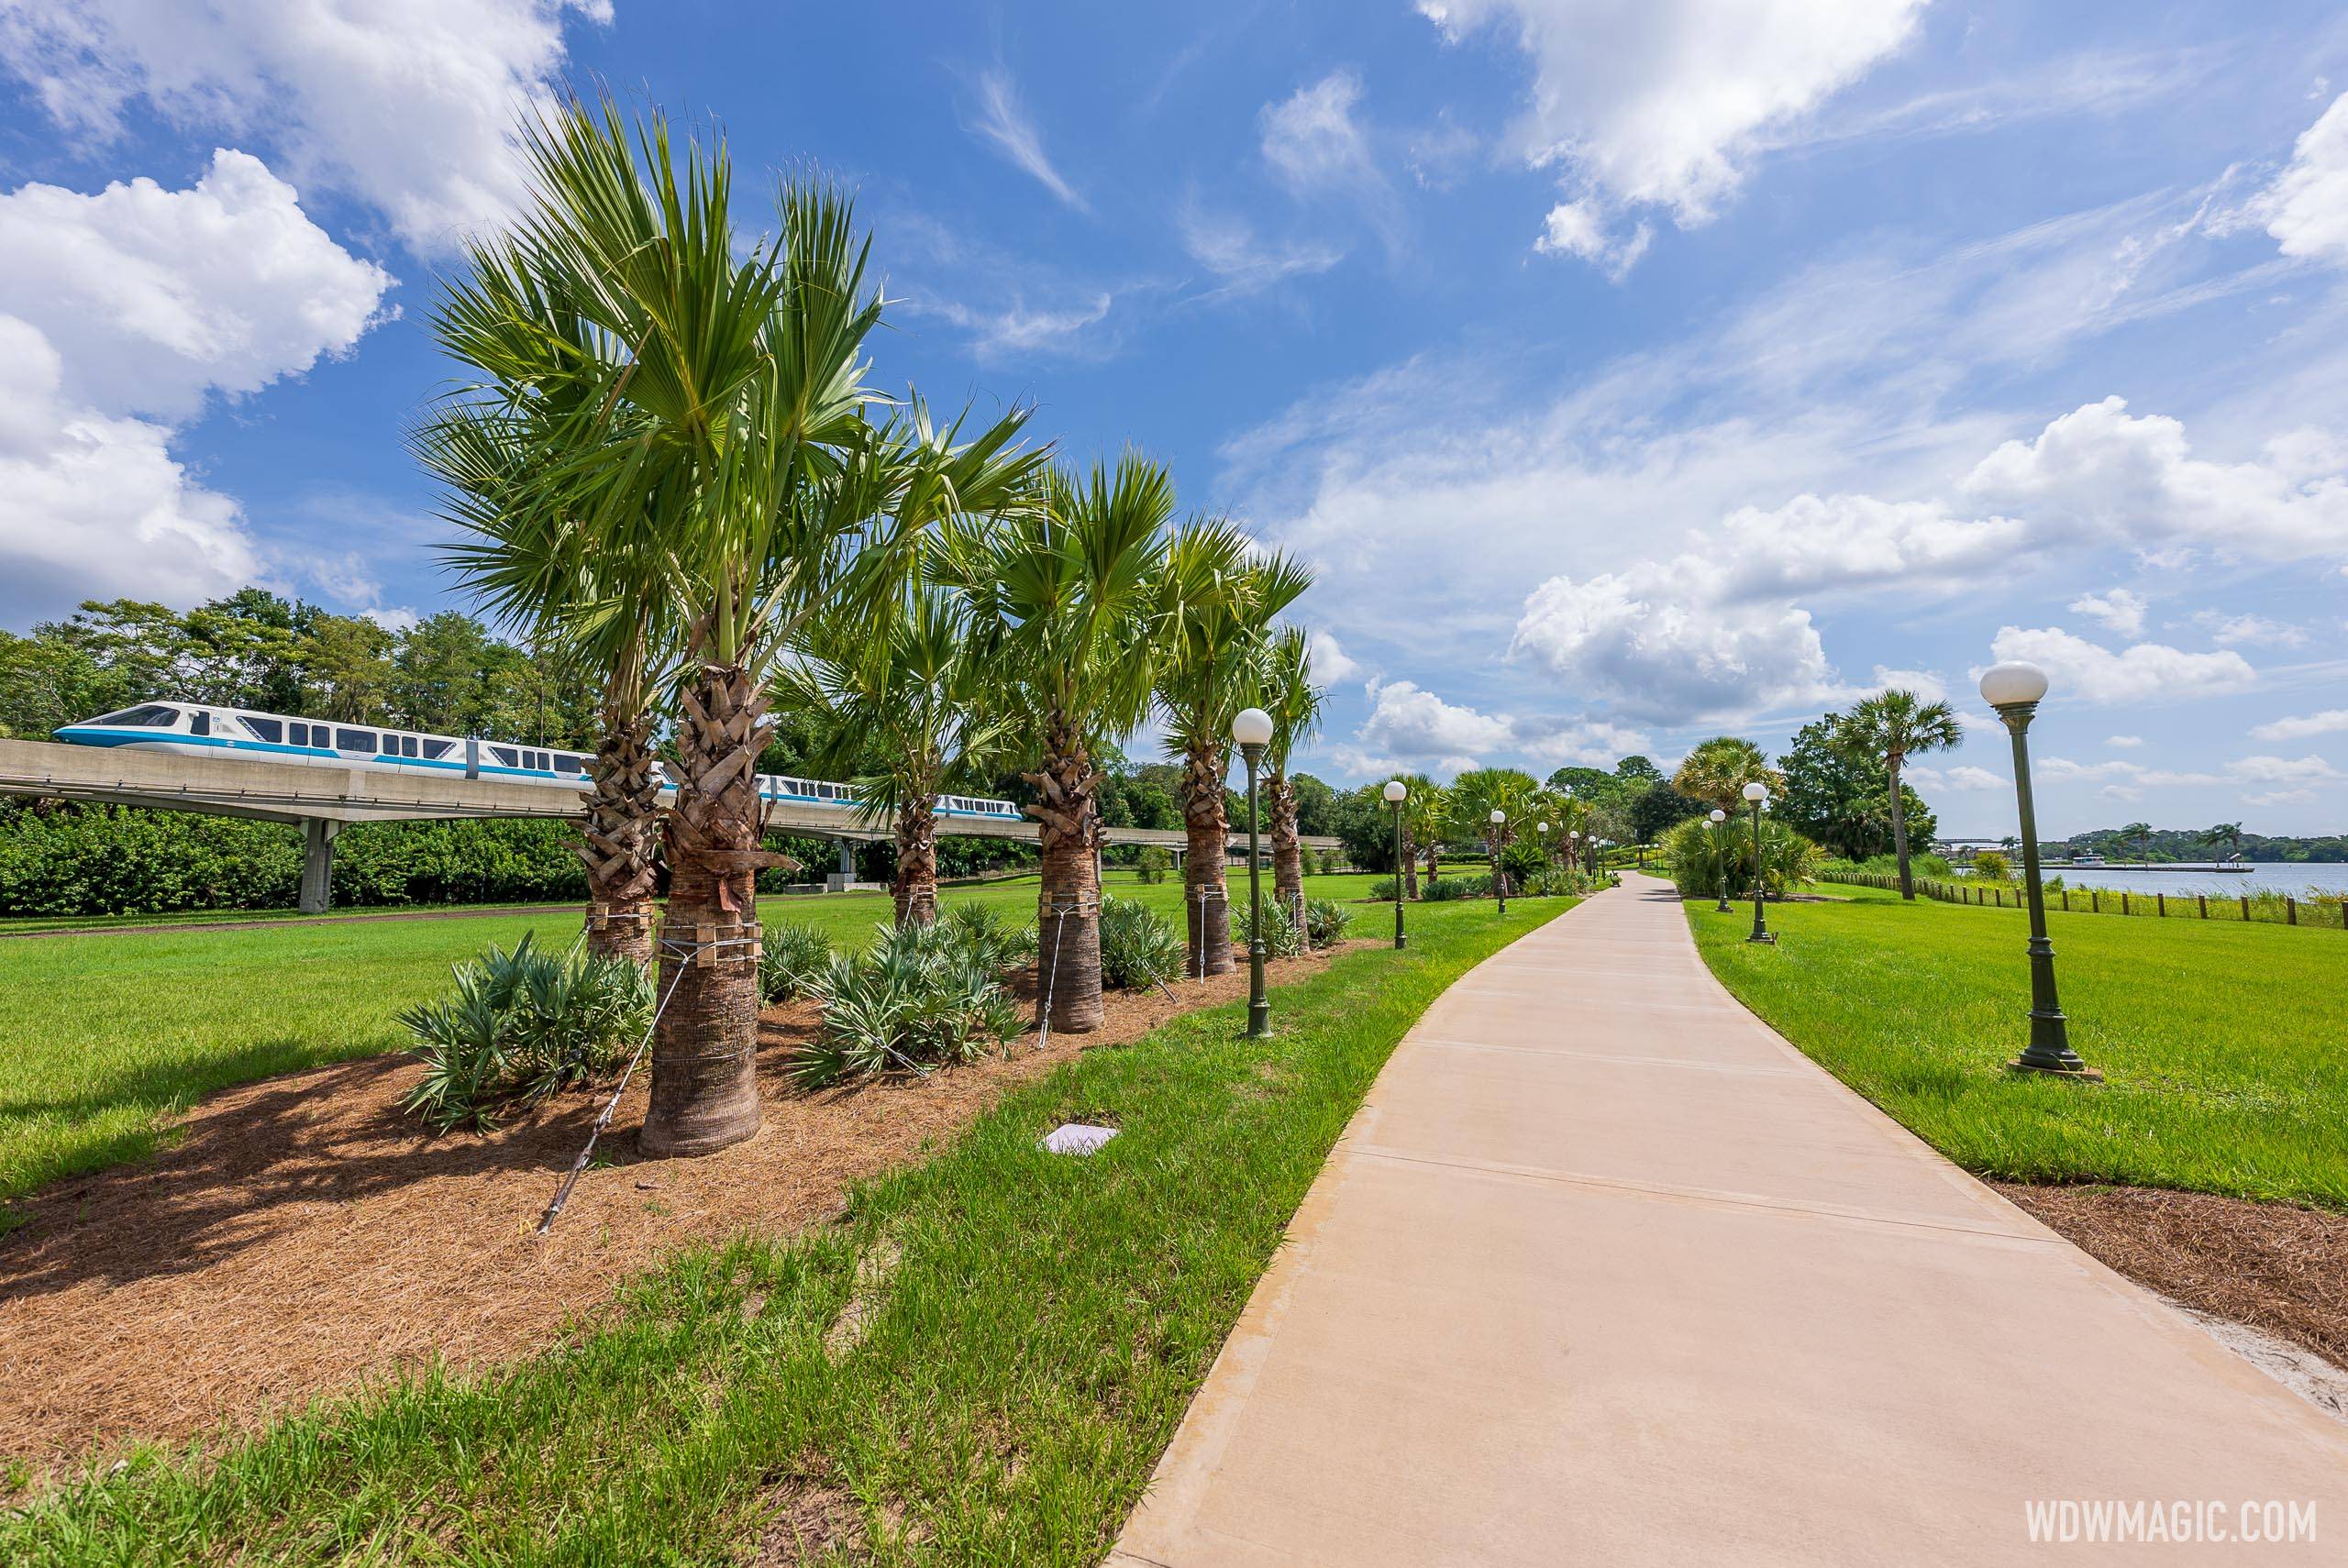 New landscaping at the Grand Floridan Resort walkway to Magic Kingdom